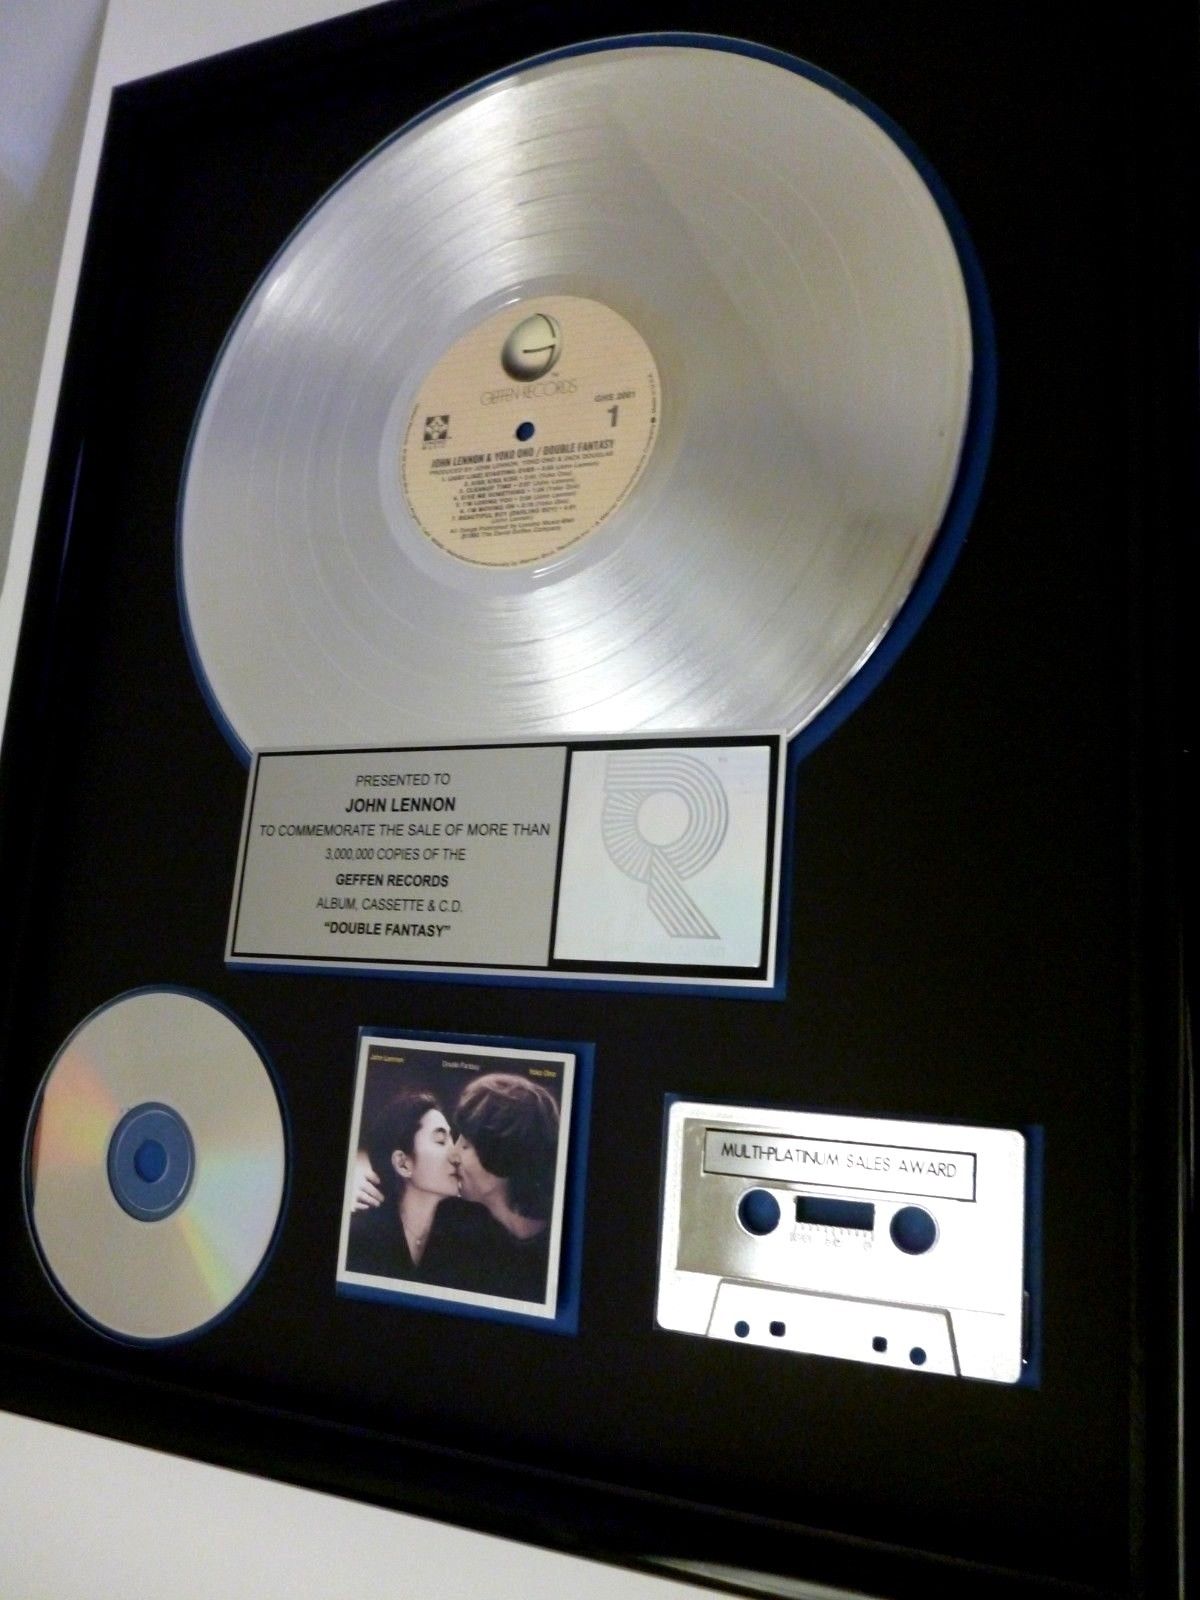 JOHN LENNON BEATLES RIAA GOLD RECORD ALBUM AWARD GOLD DISC